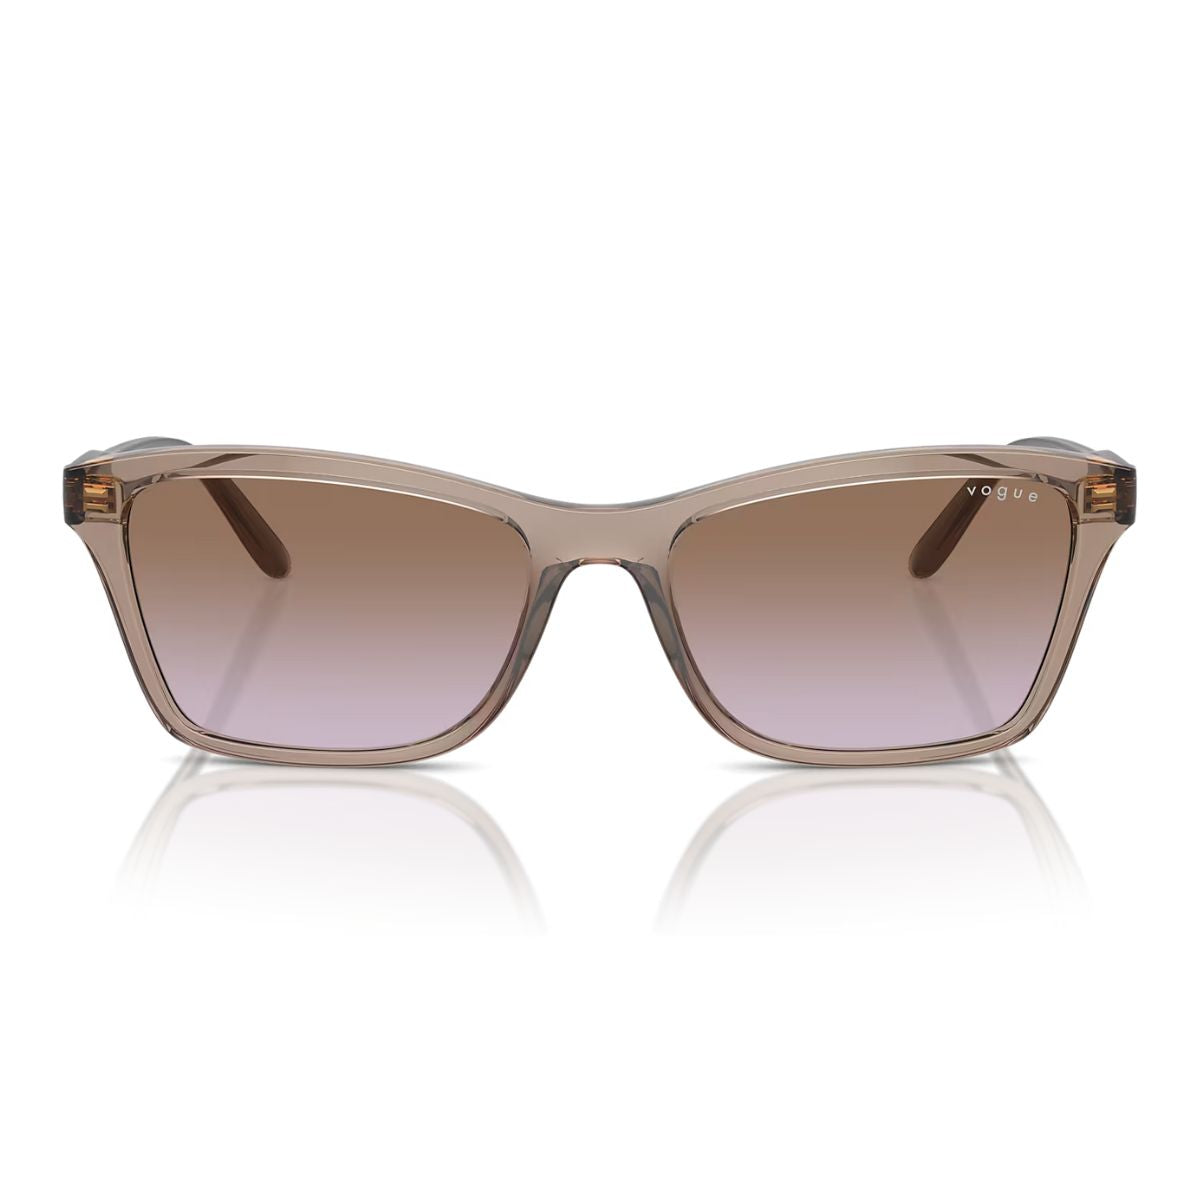 "Shop Stylish Vogue Rectangle Sunglasses For Women's At Online"